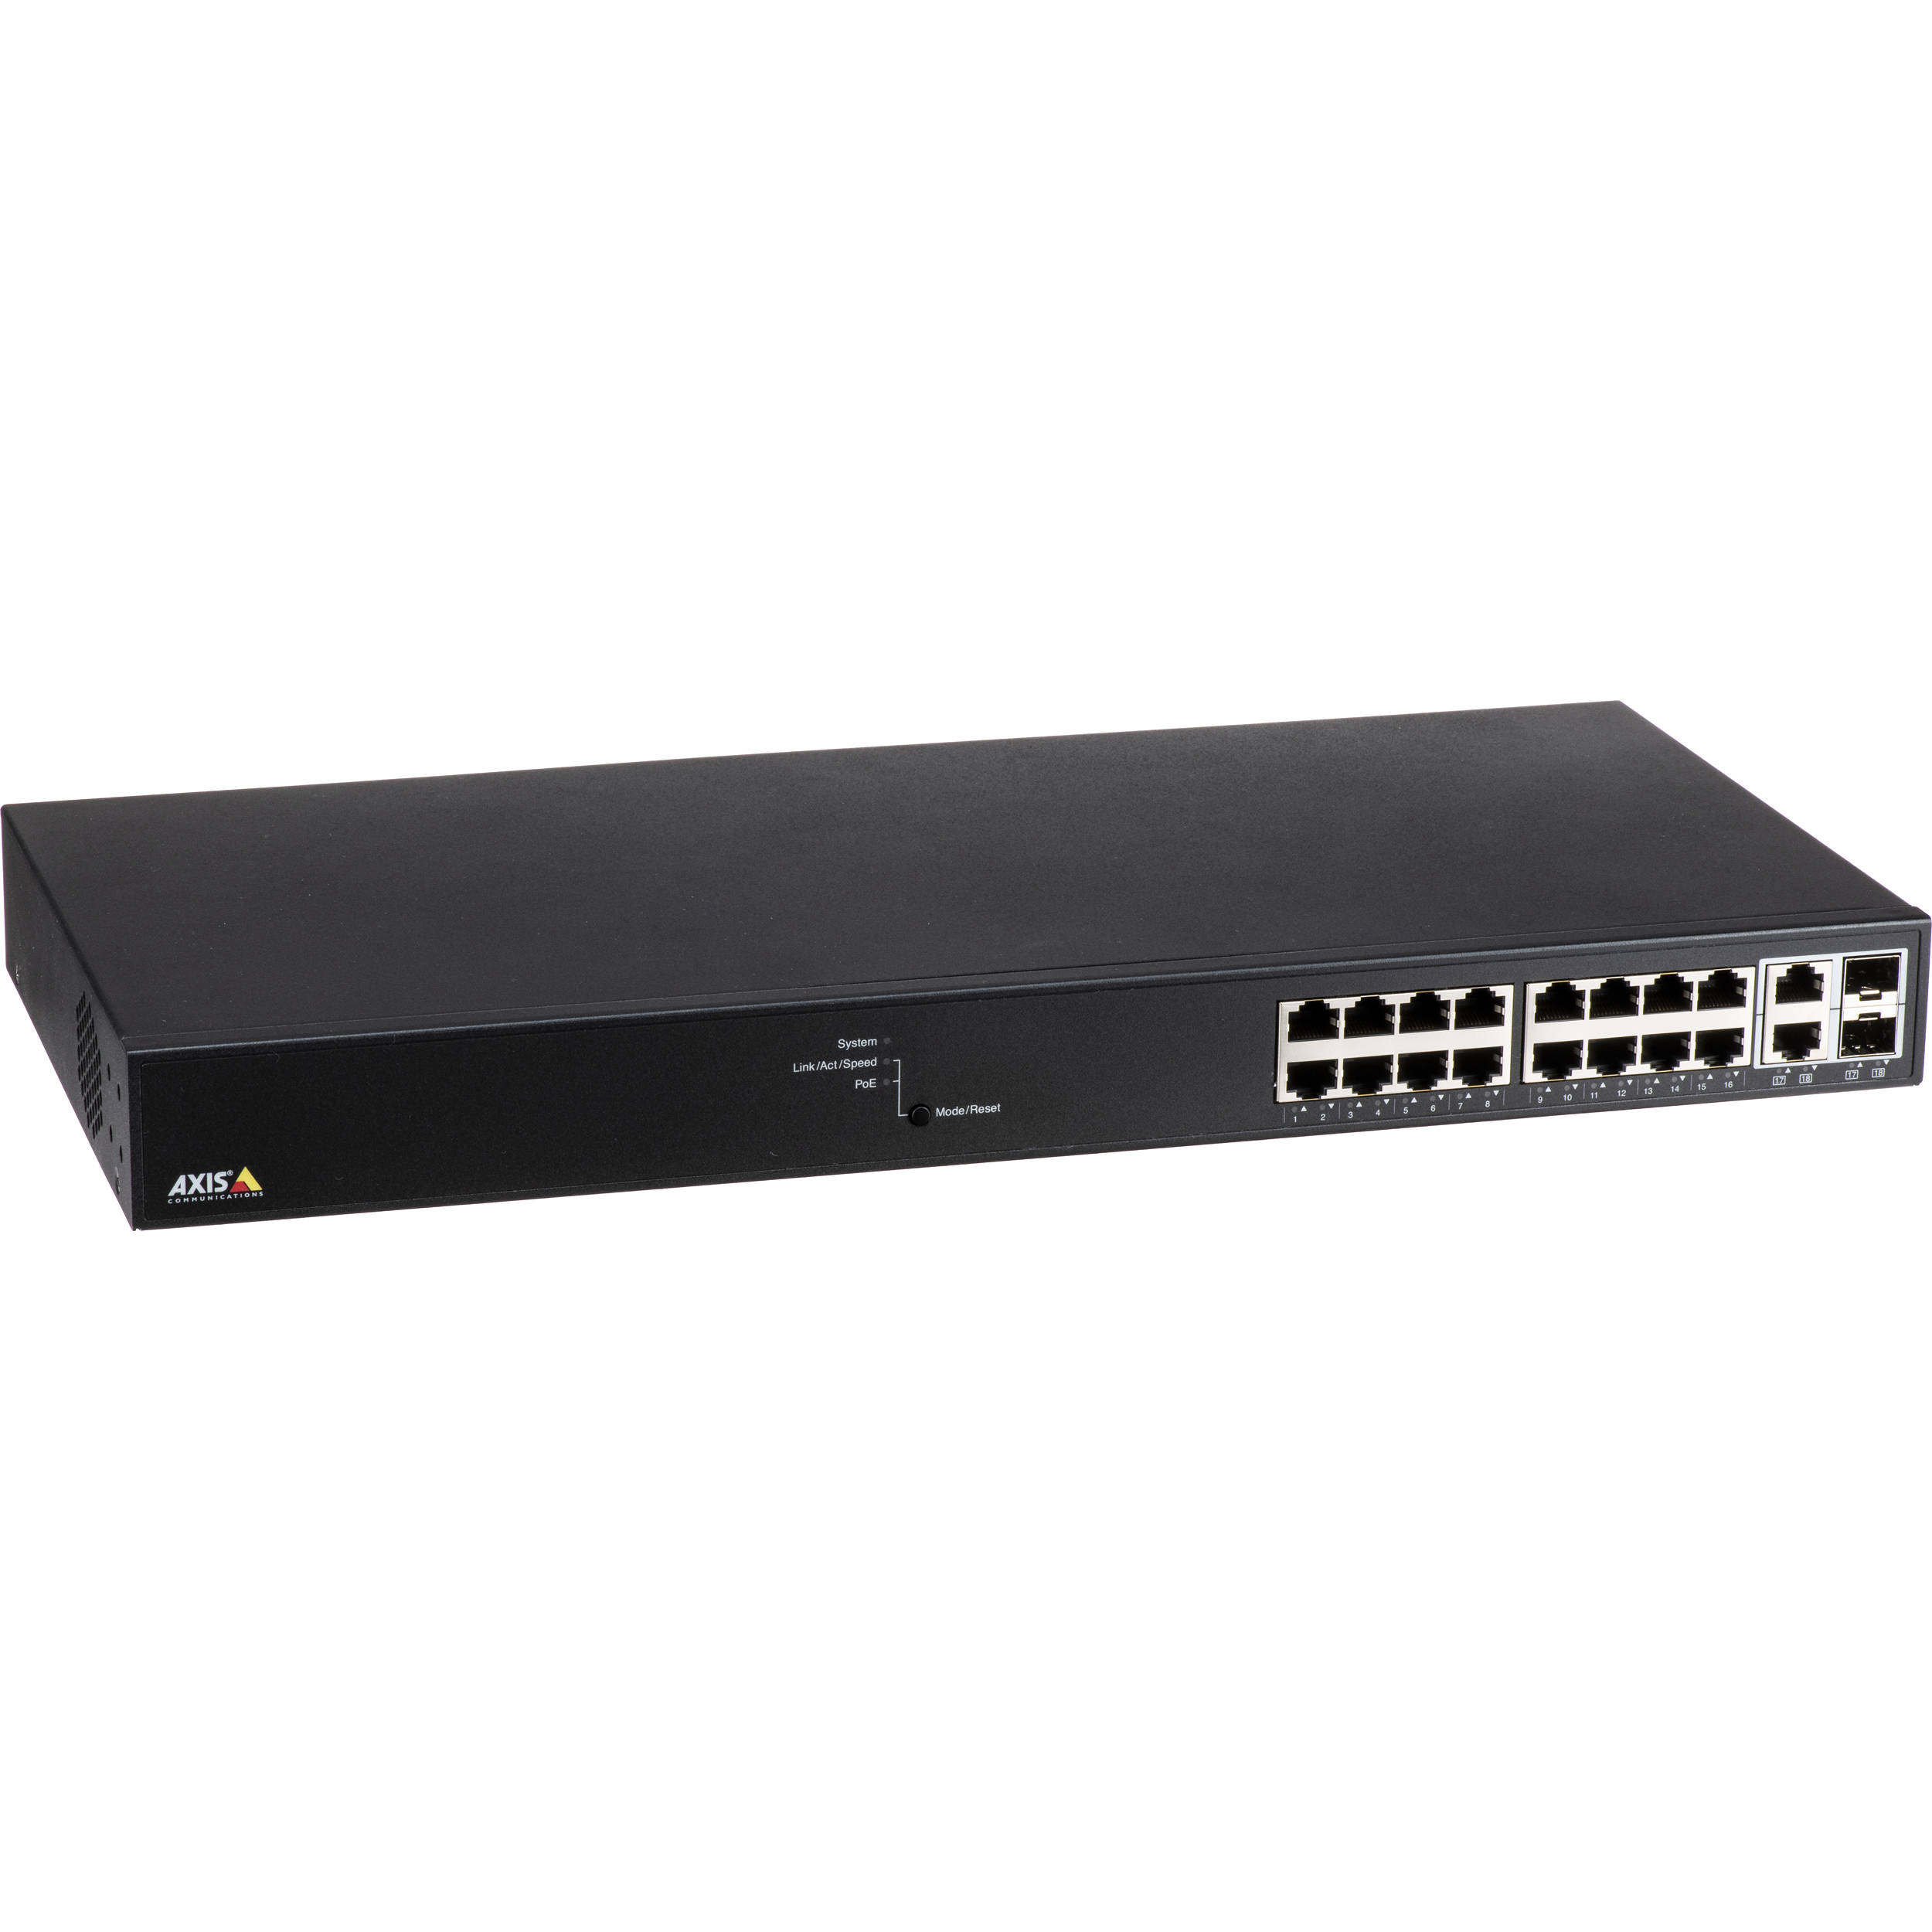 T8516 POE NETWORK SWITCH switch-de-16-puertos UPC 7331021055308 - 5801-694